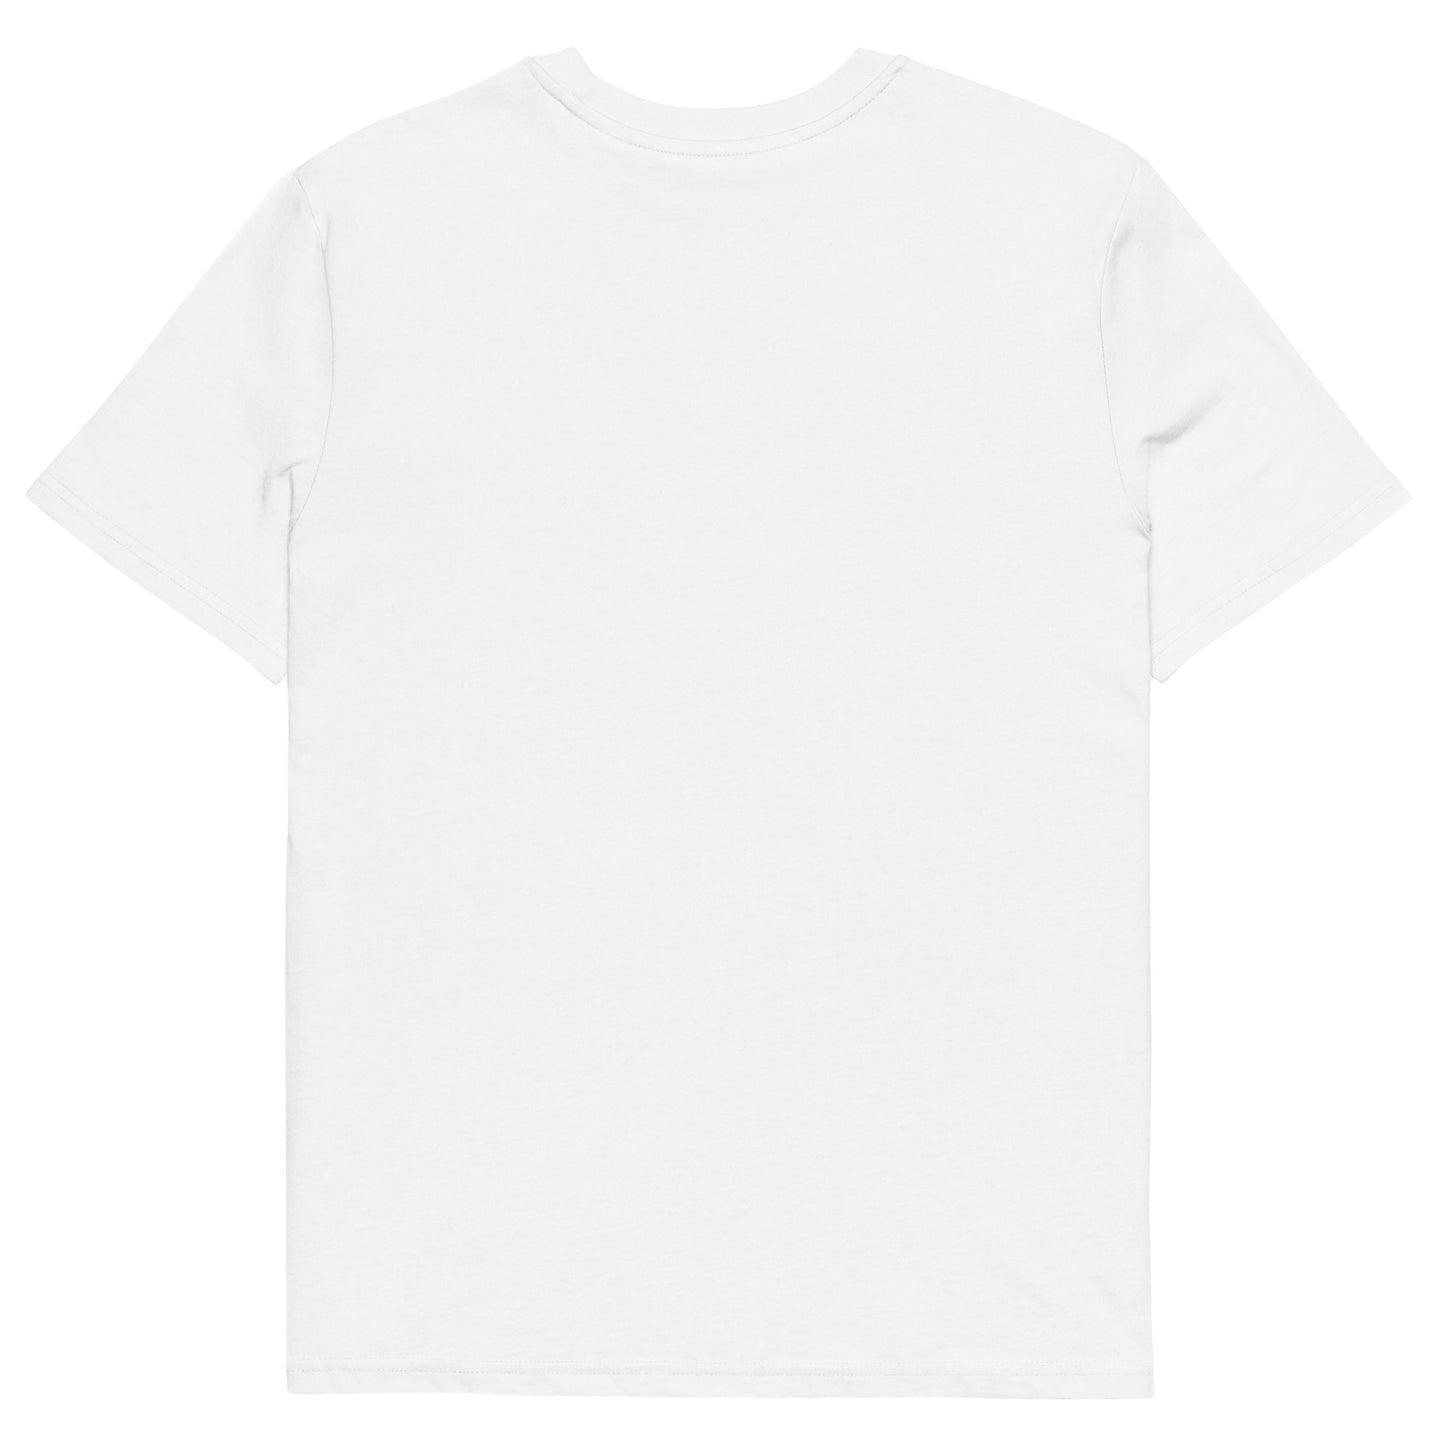 ME- NEVER AGAIN  ALSO ME- AGAINS Unisex organic cotton t-shirt